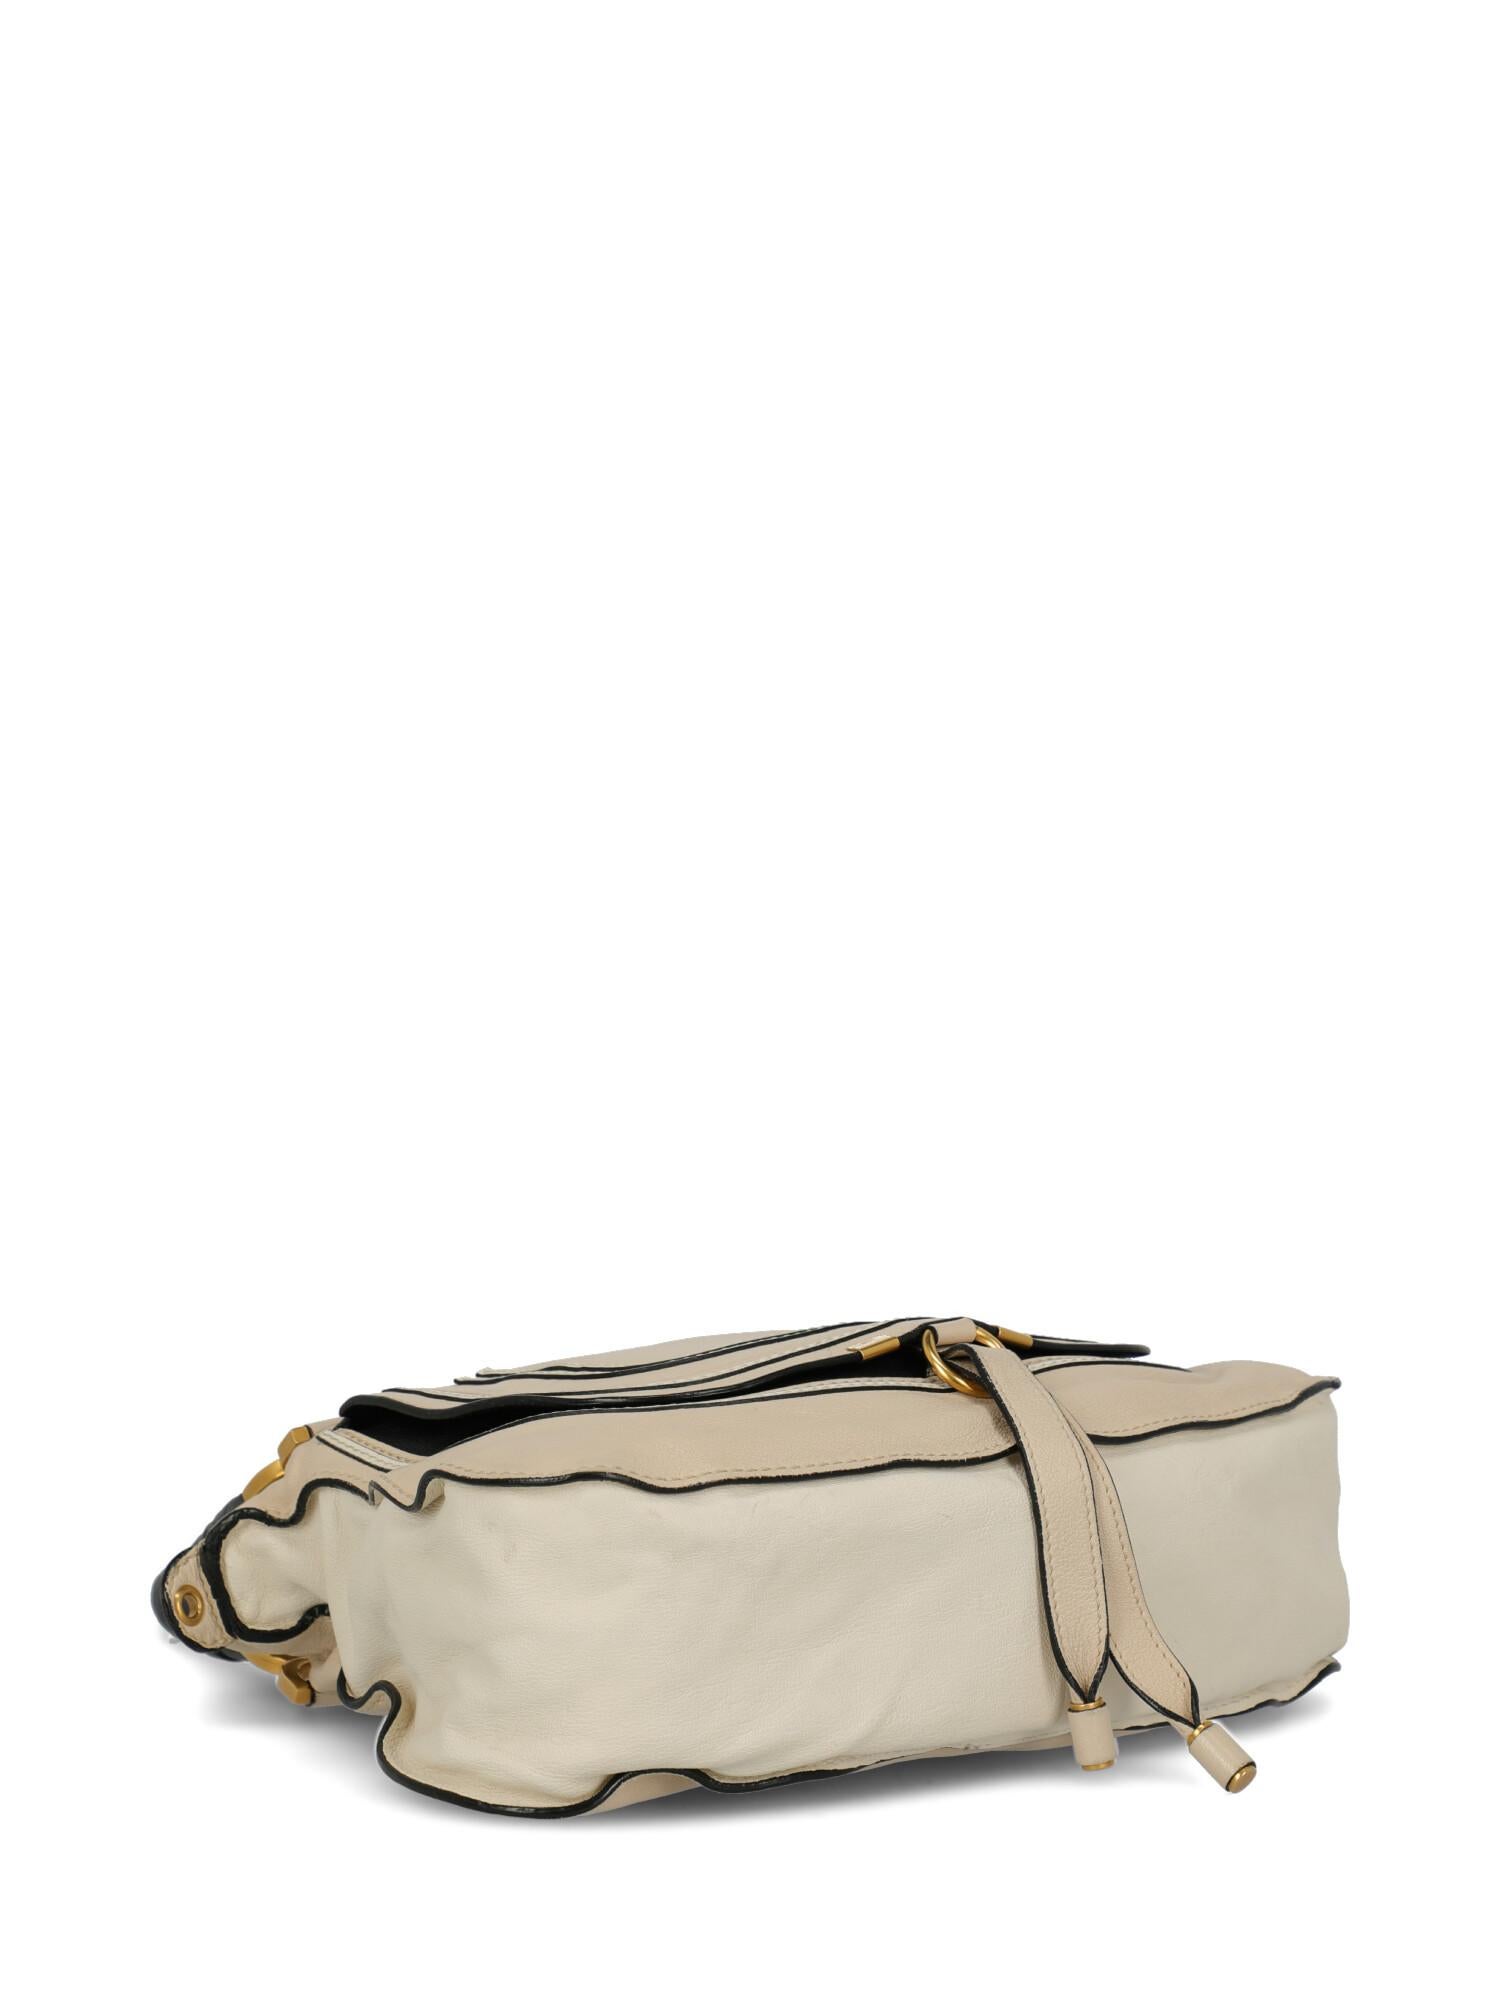 Chloe Woman Handbag Beige  For Sale 1